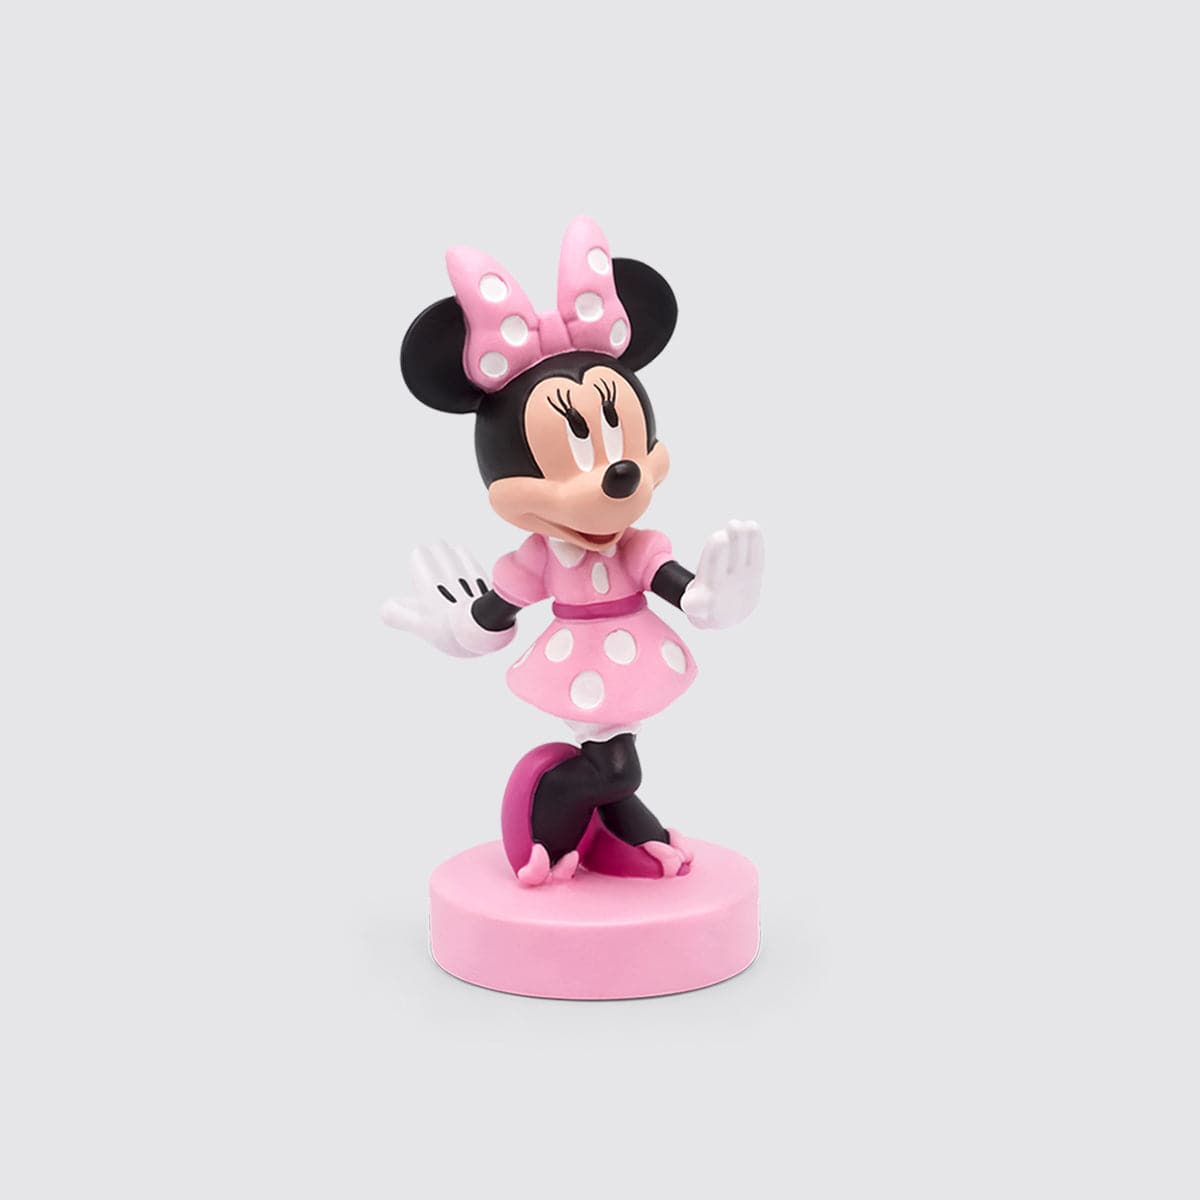 Mickey Mouse & Friends Disney Lot de 10 mini figurines – Minnie